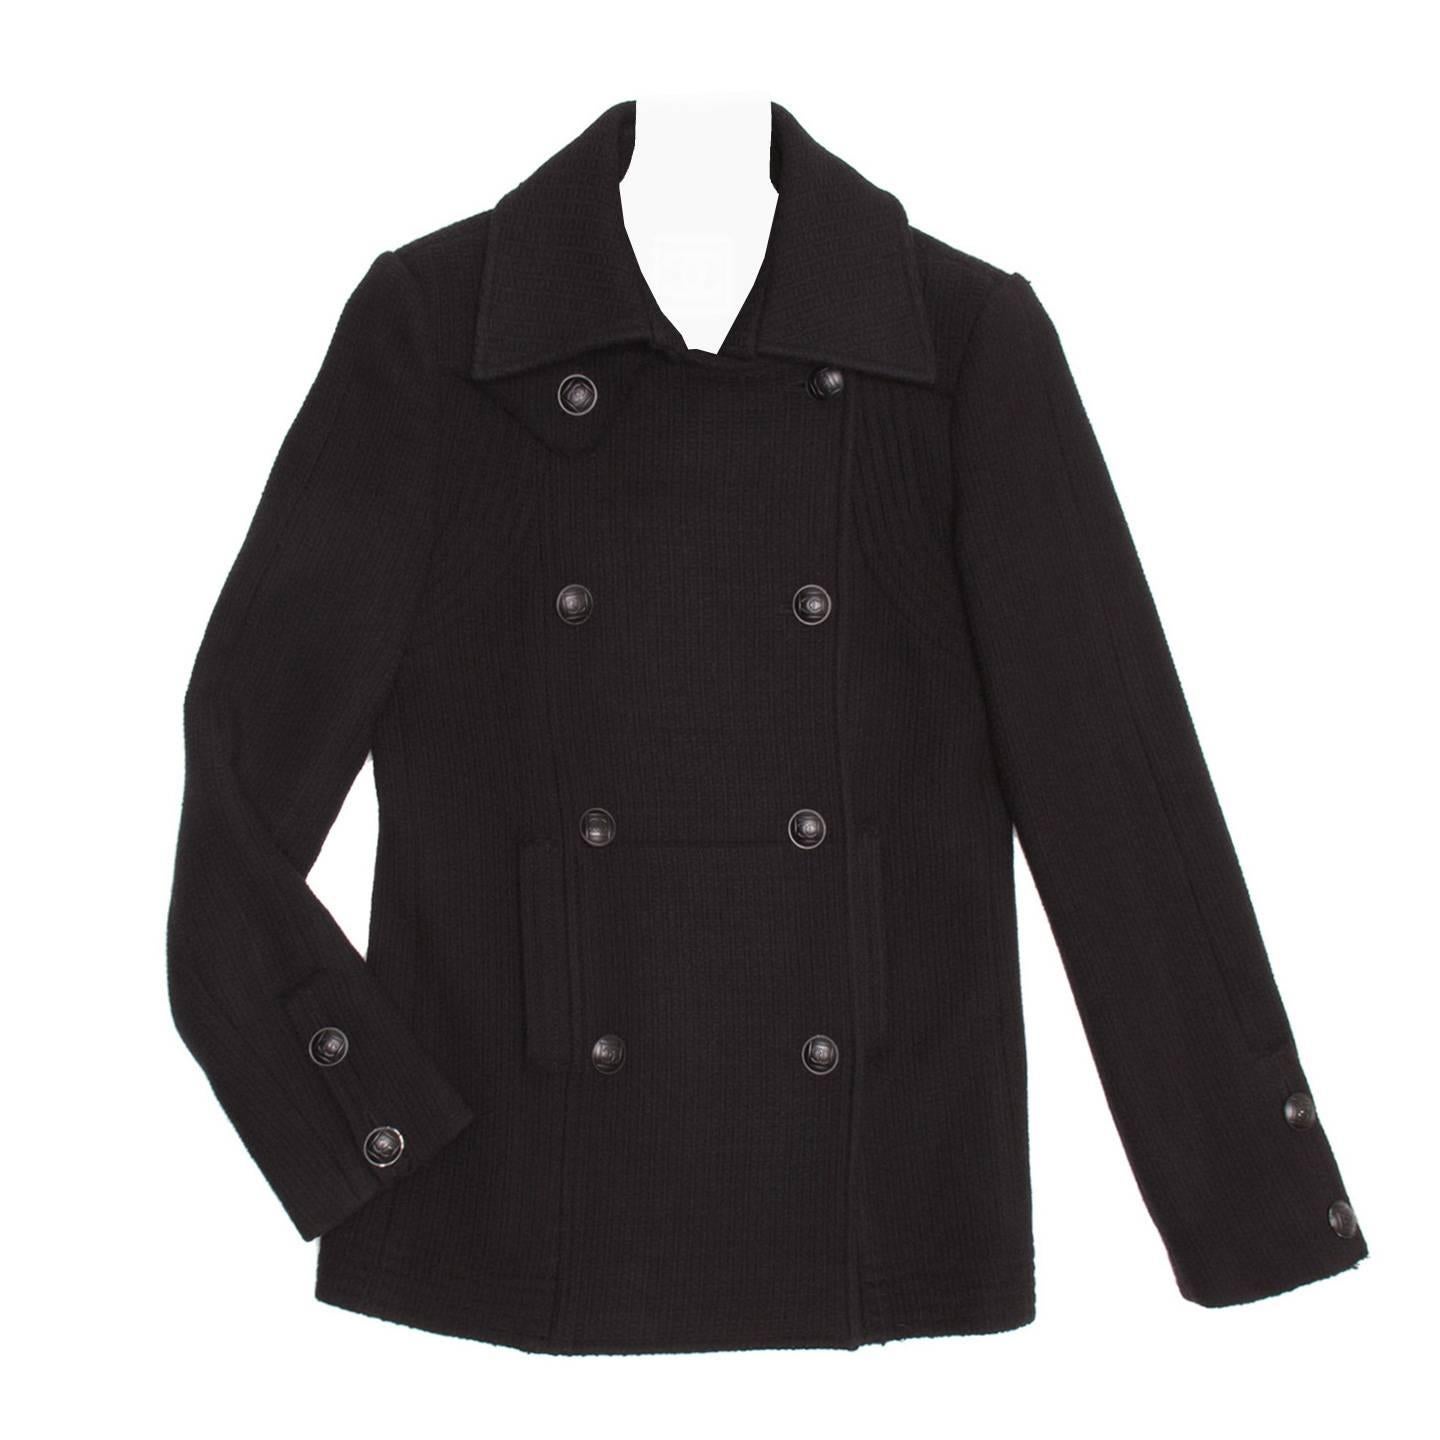 Chanel Black Wool Peacoat Jacket